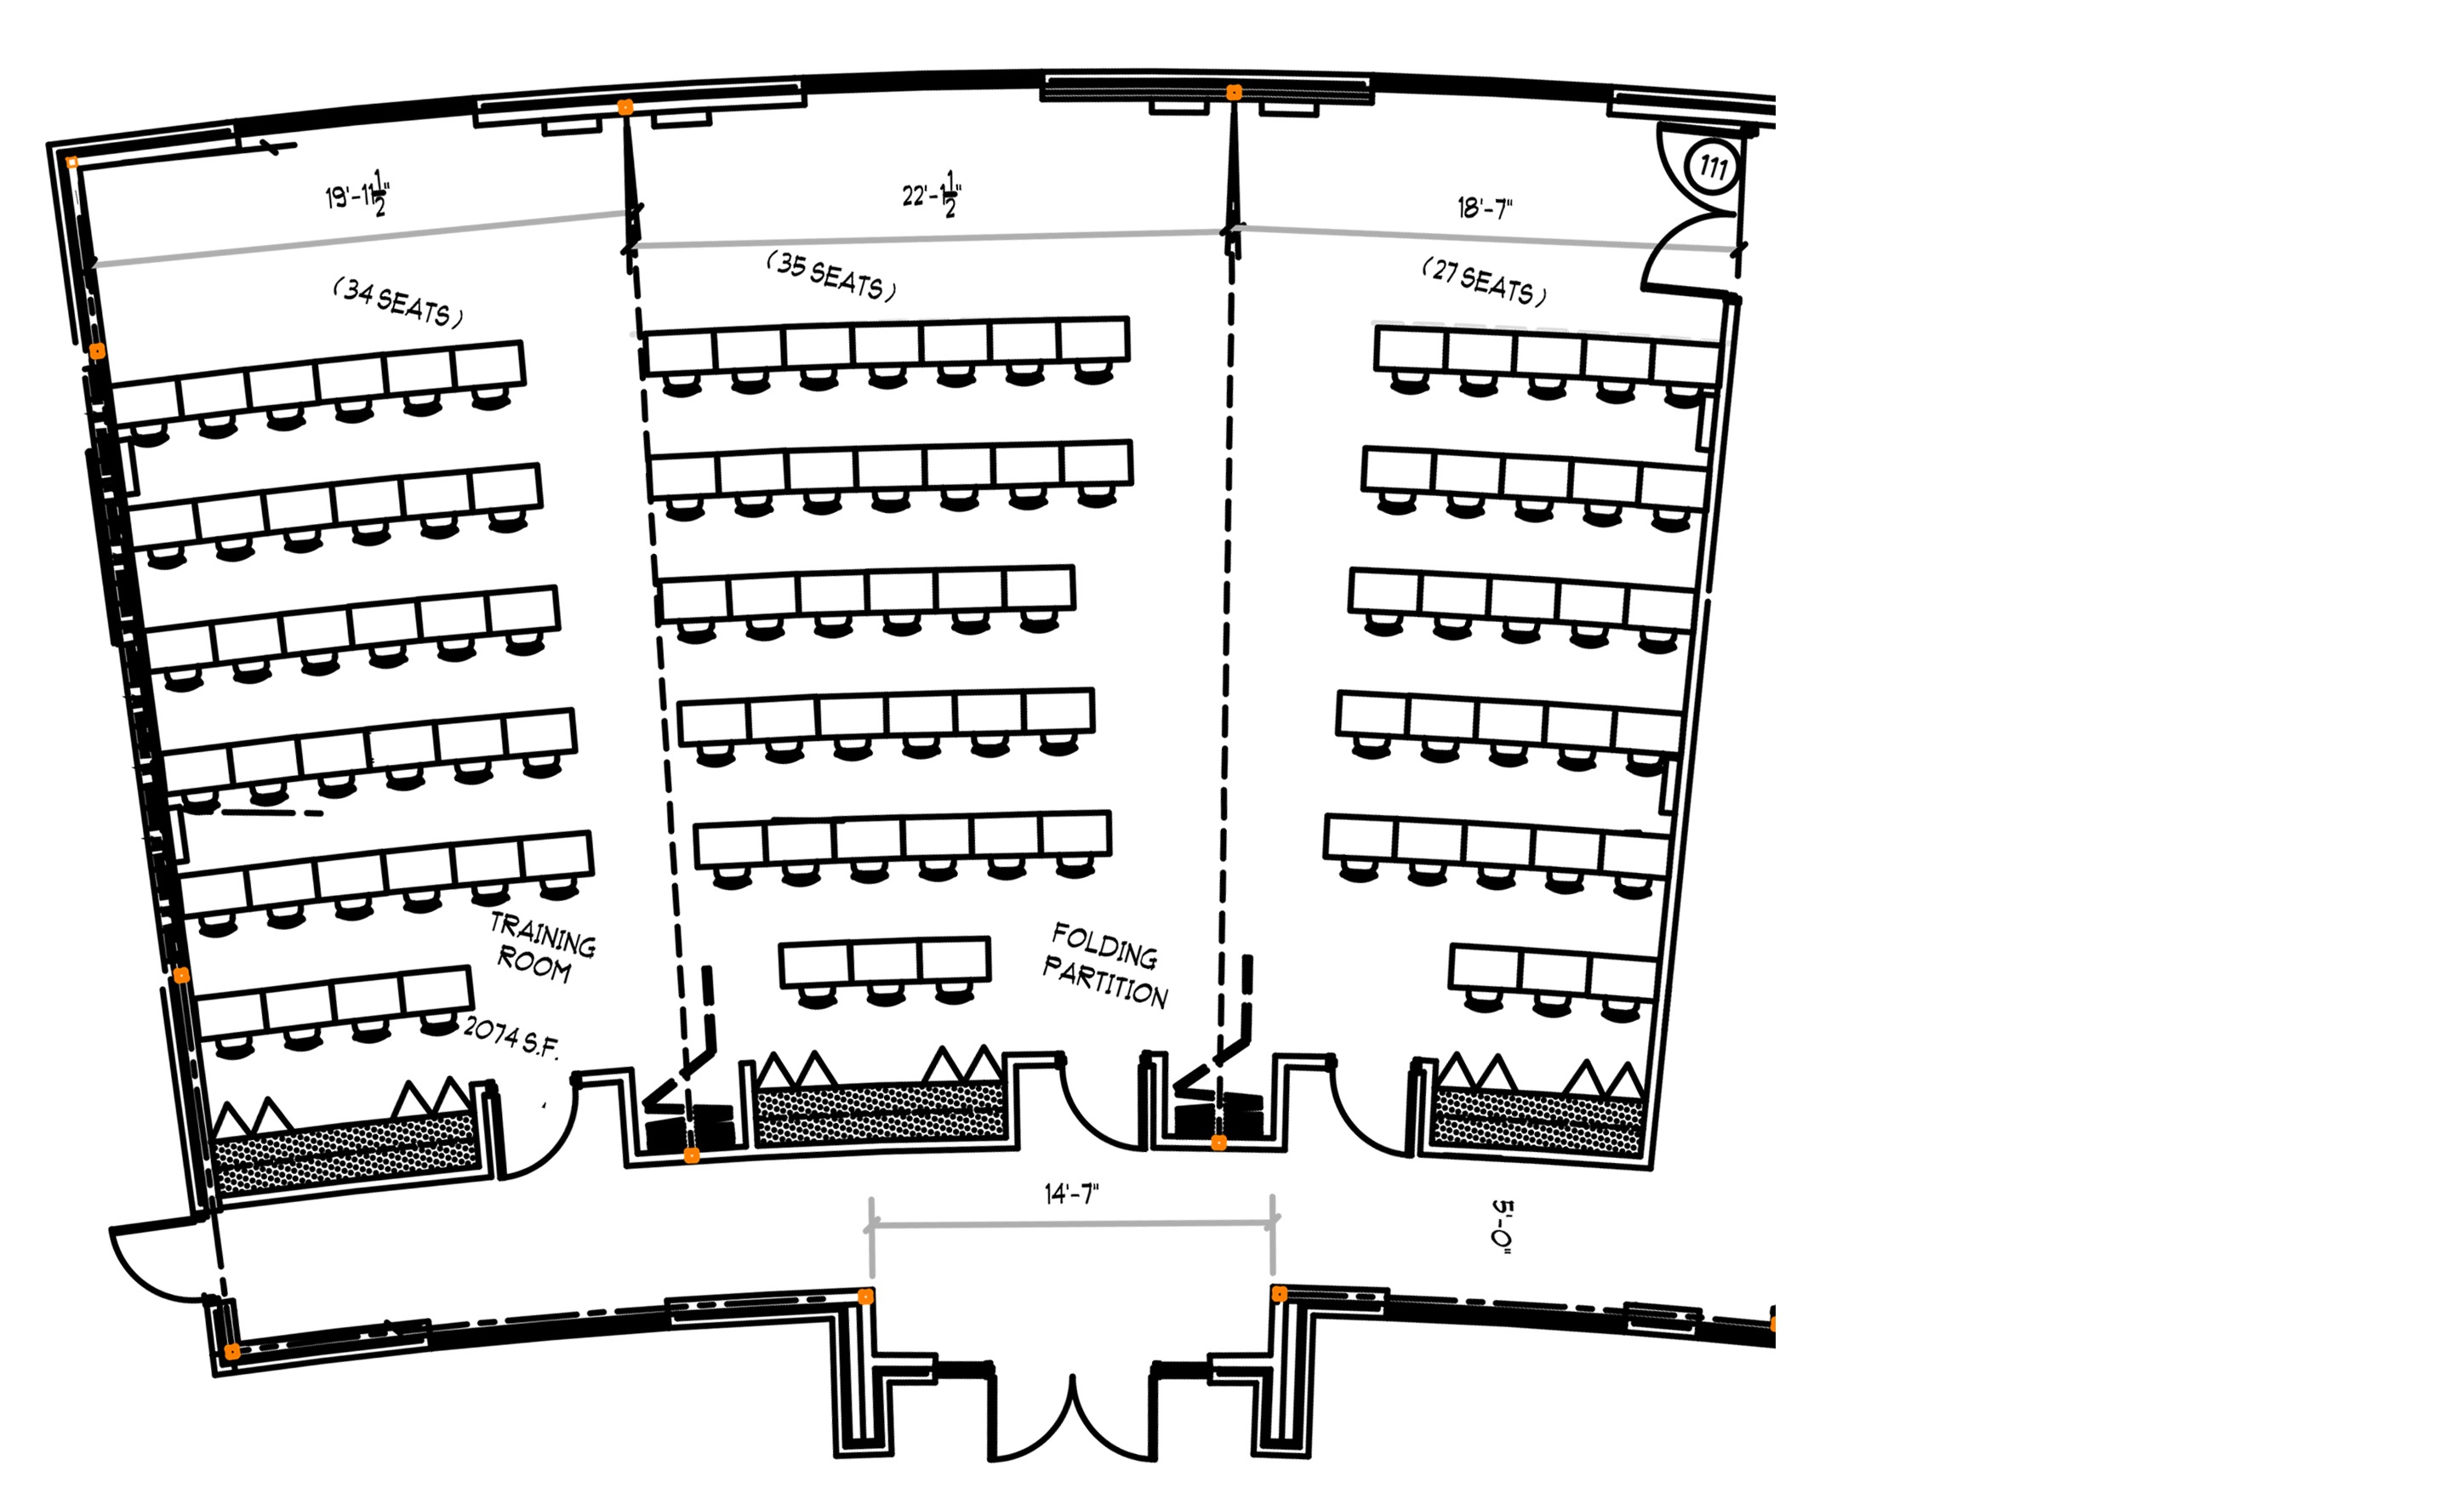 Line-drawing of FSA Training Center floor plan